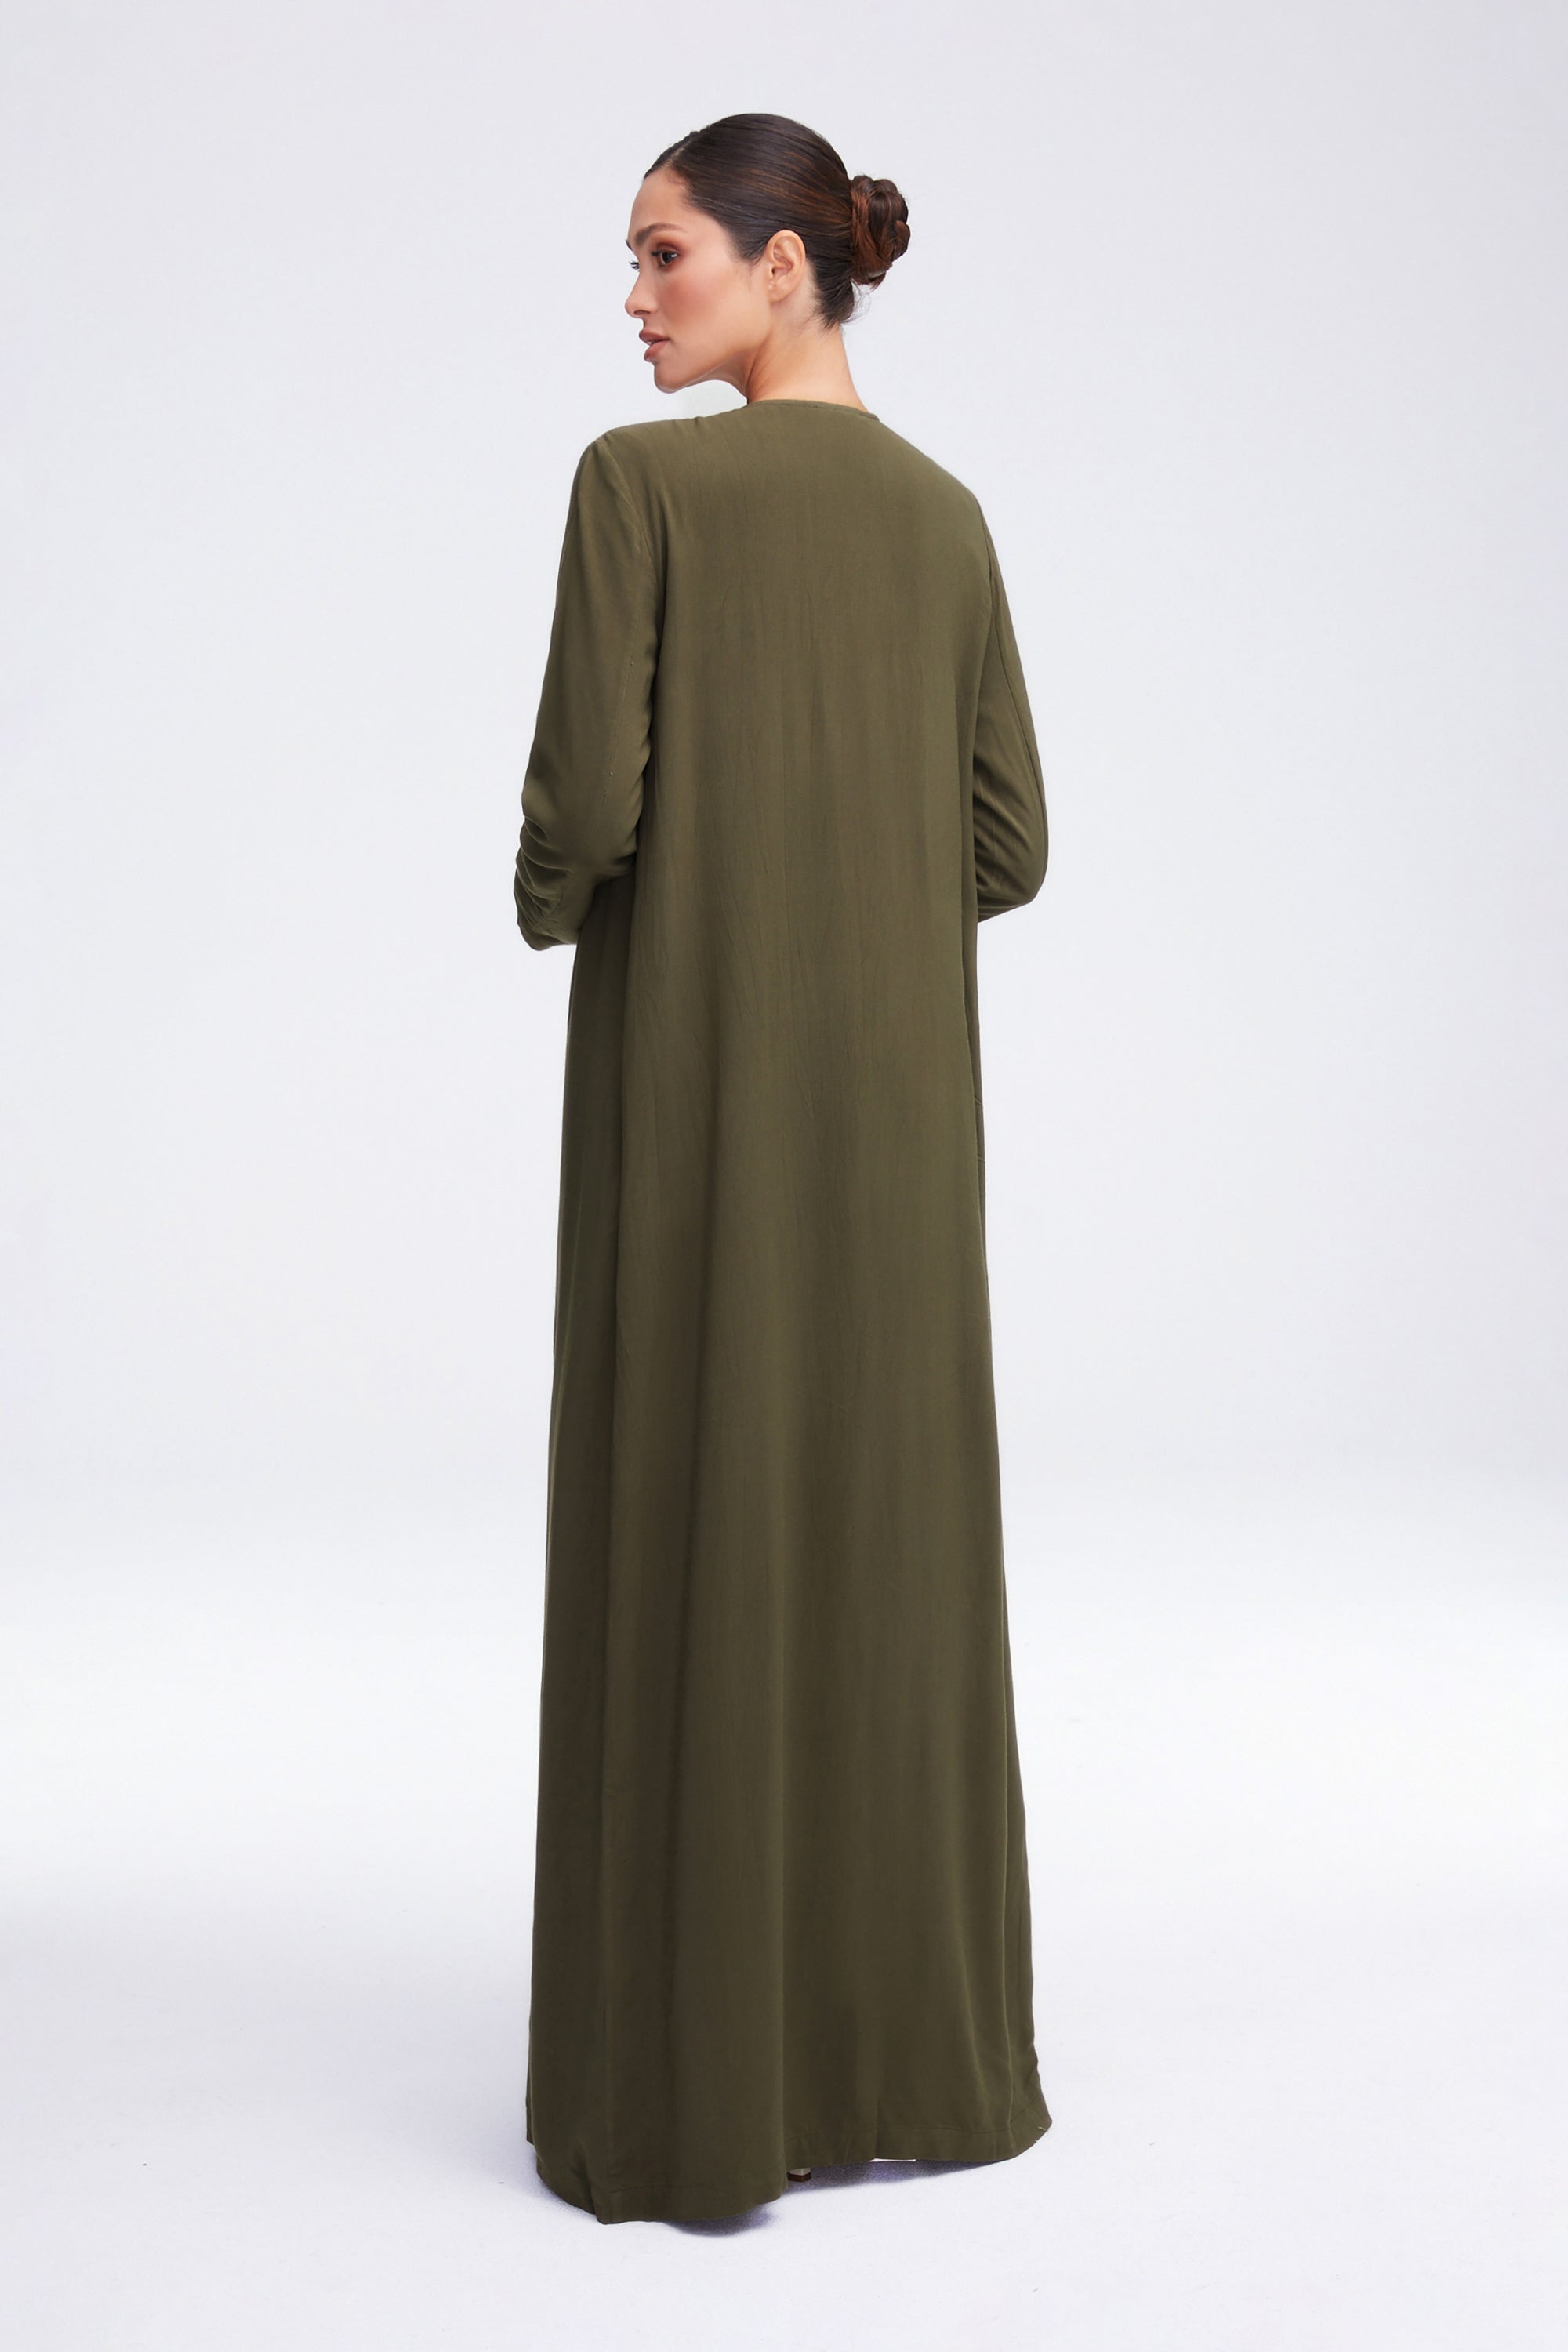 Essential Woven Open Abaya - Olive Clothing saigonodysseyhotel 